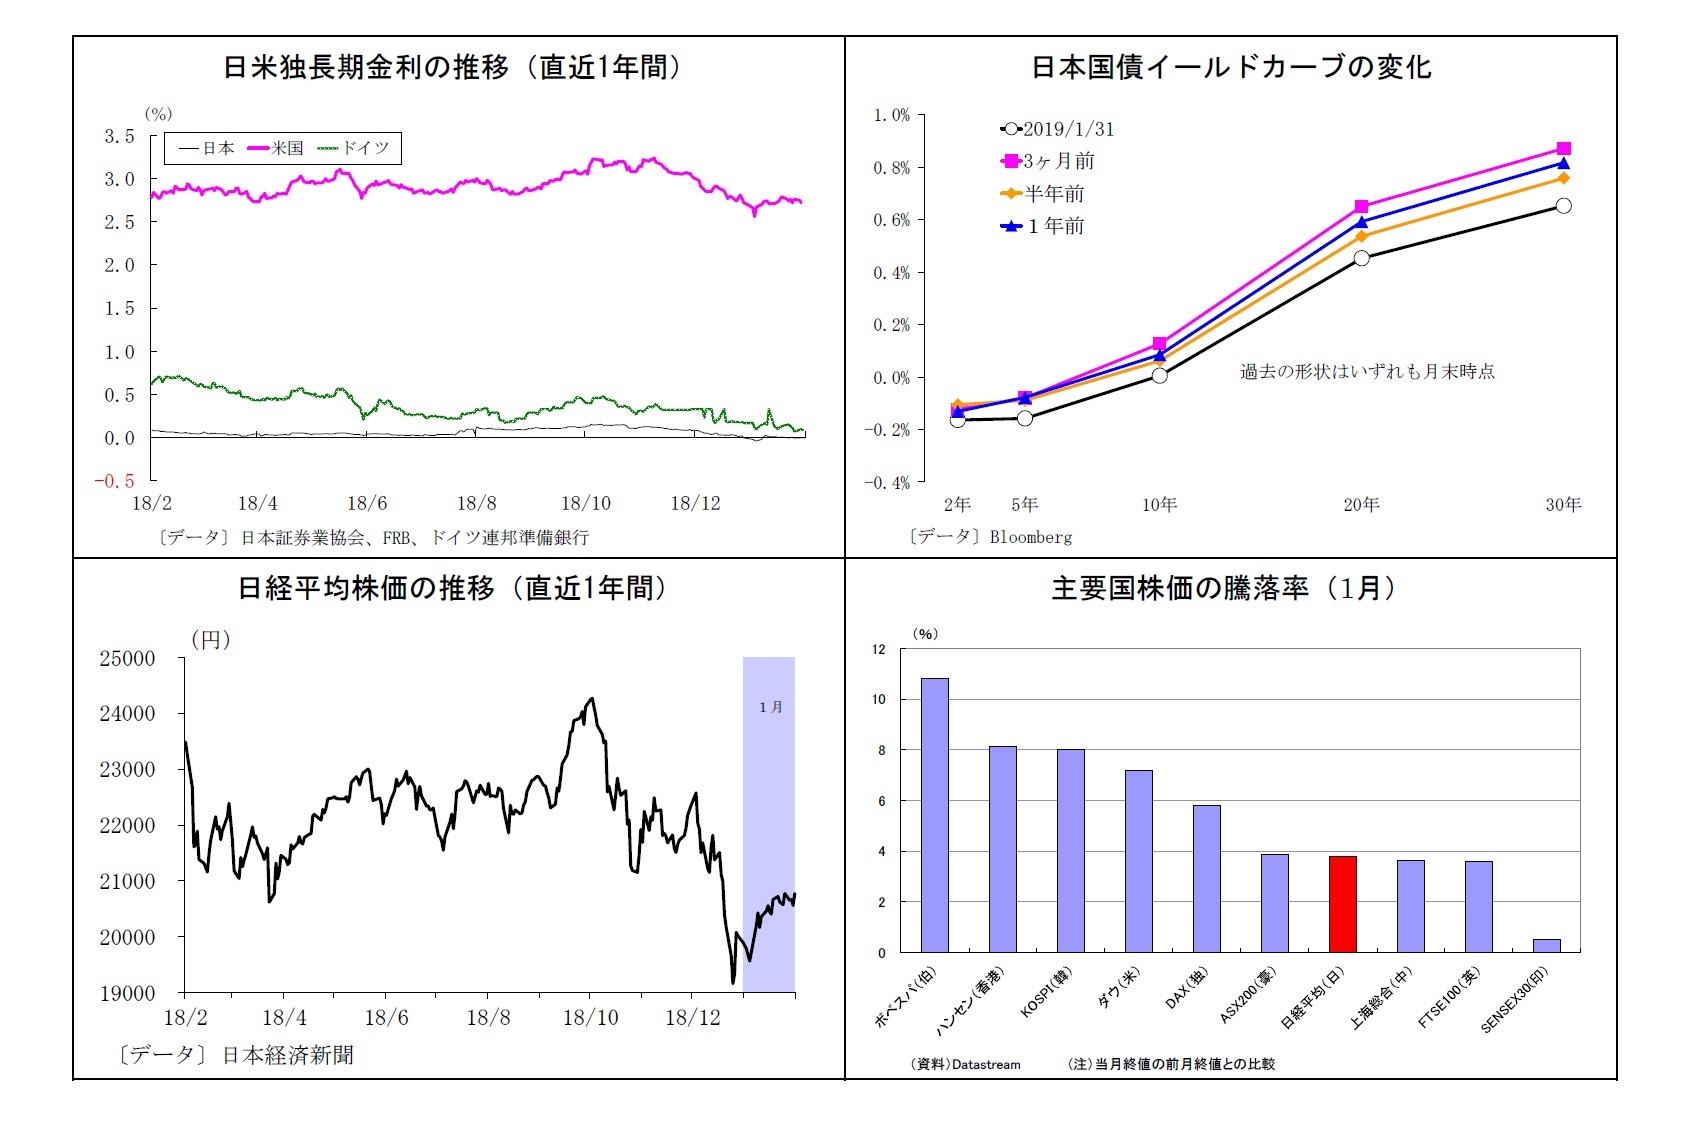 日米独長期金利の推移（直近1年間）/日本国債イールドカーブの変化/日経平均株価の推移（直近1年間）/主要国株価の騰落率（1月）